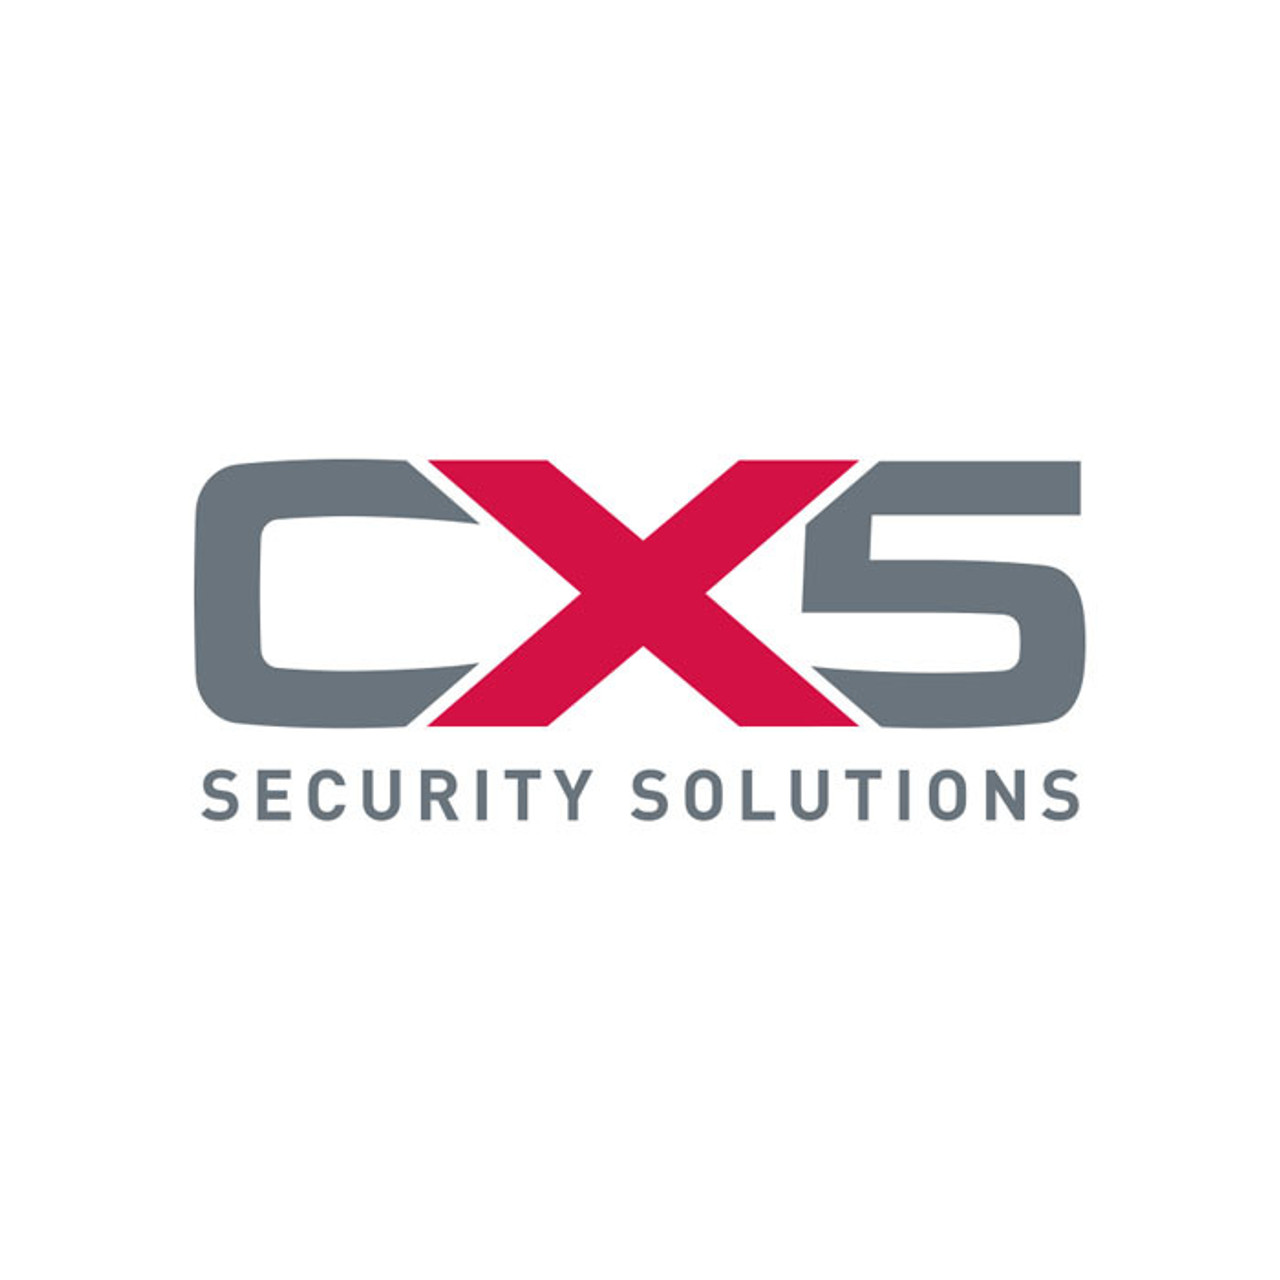 CX5 SECURITY